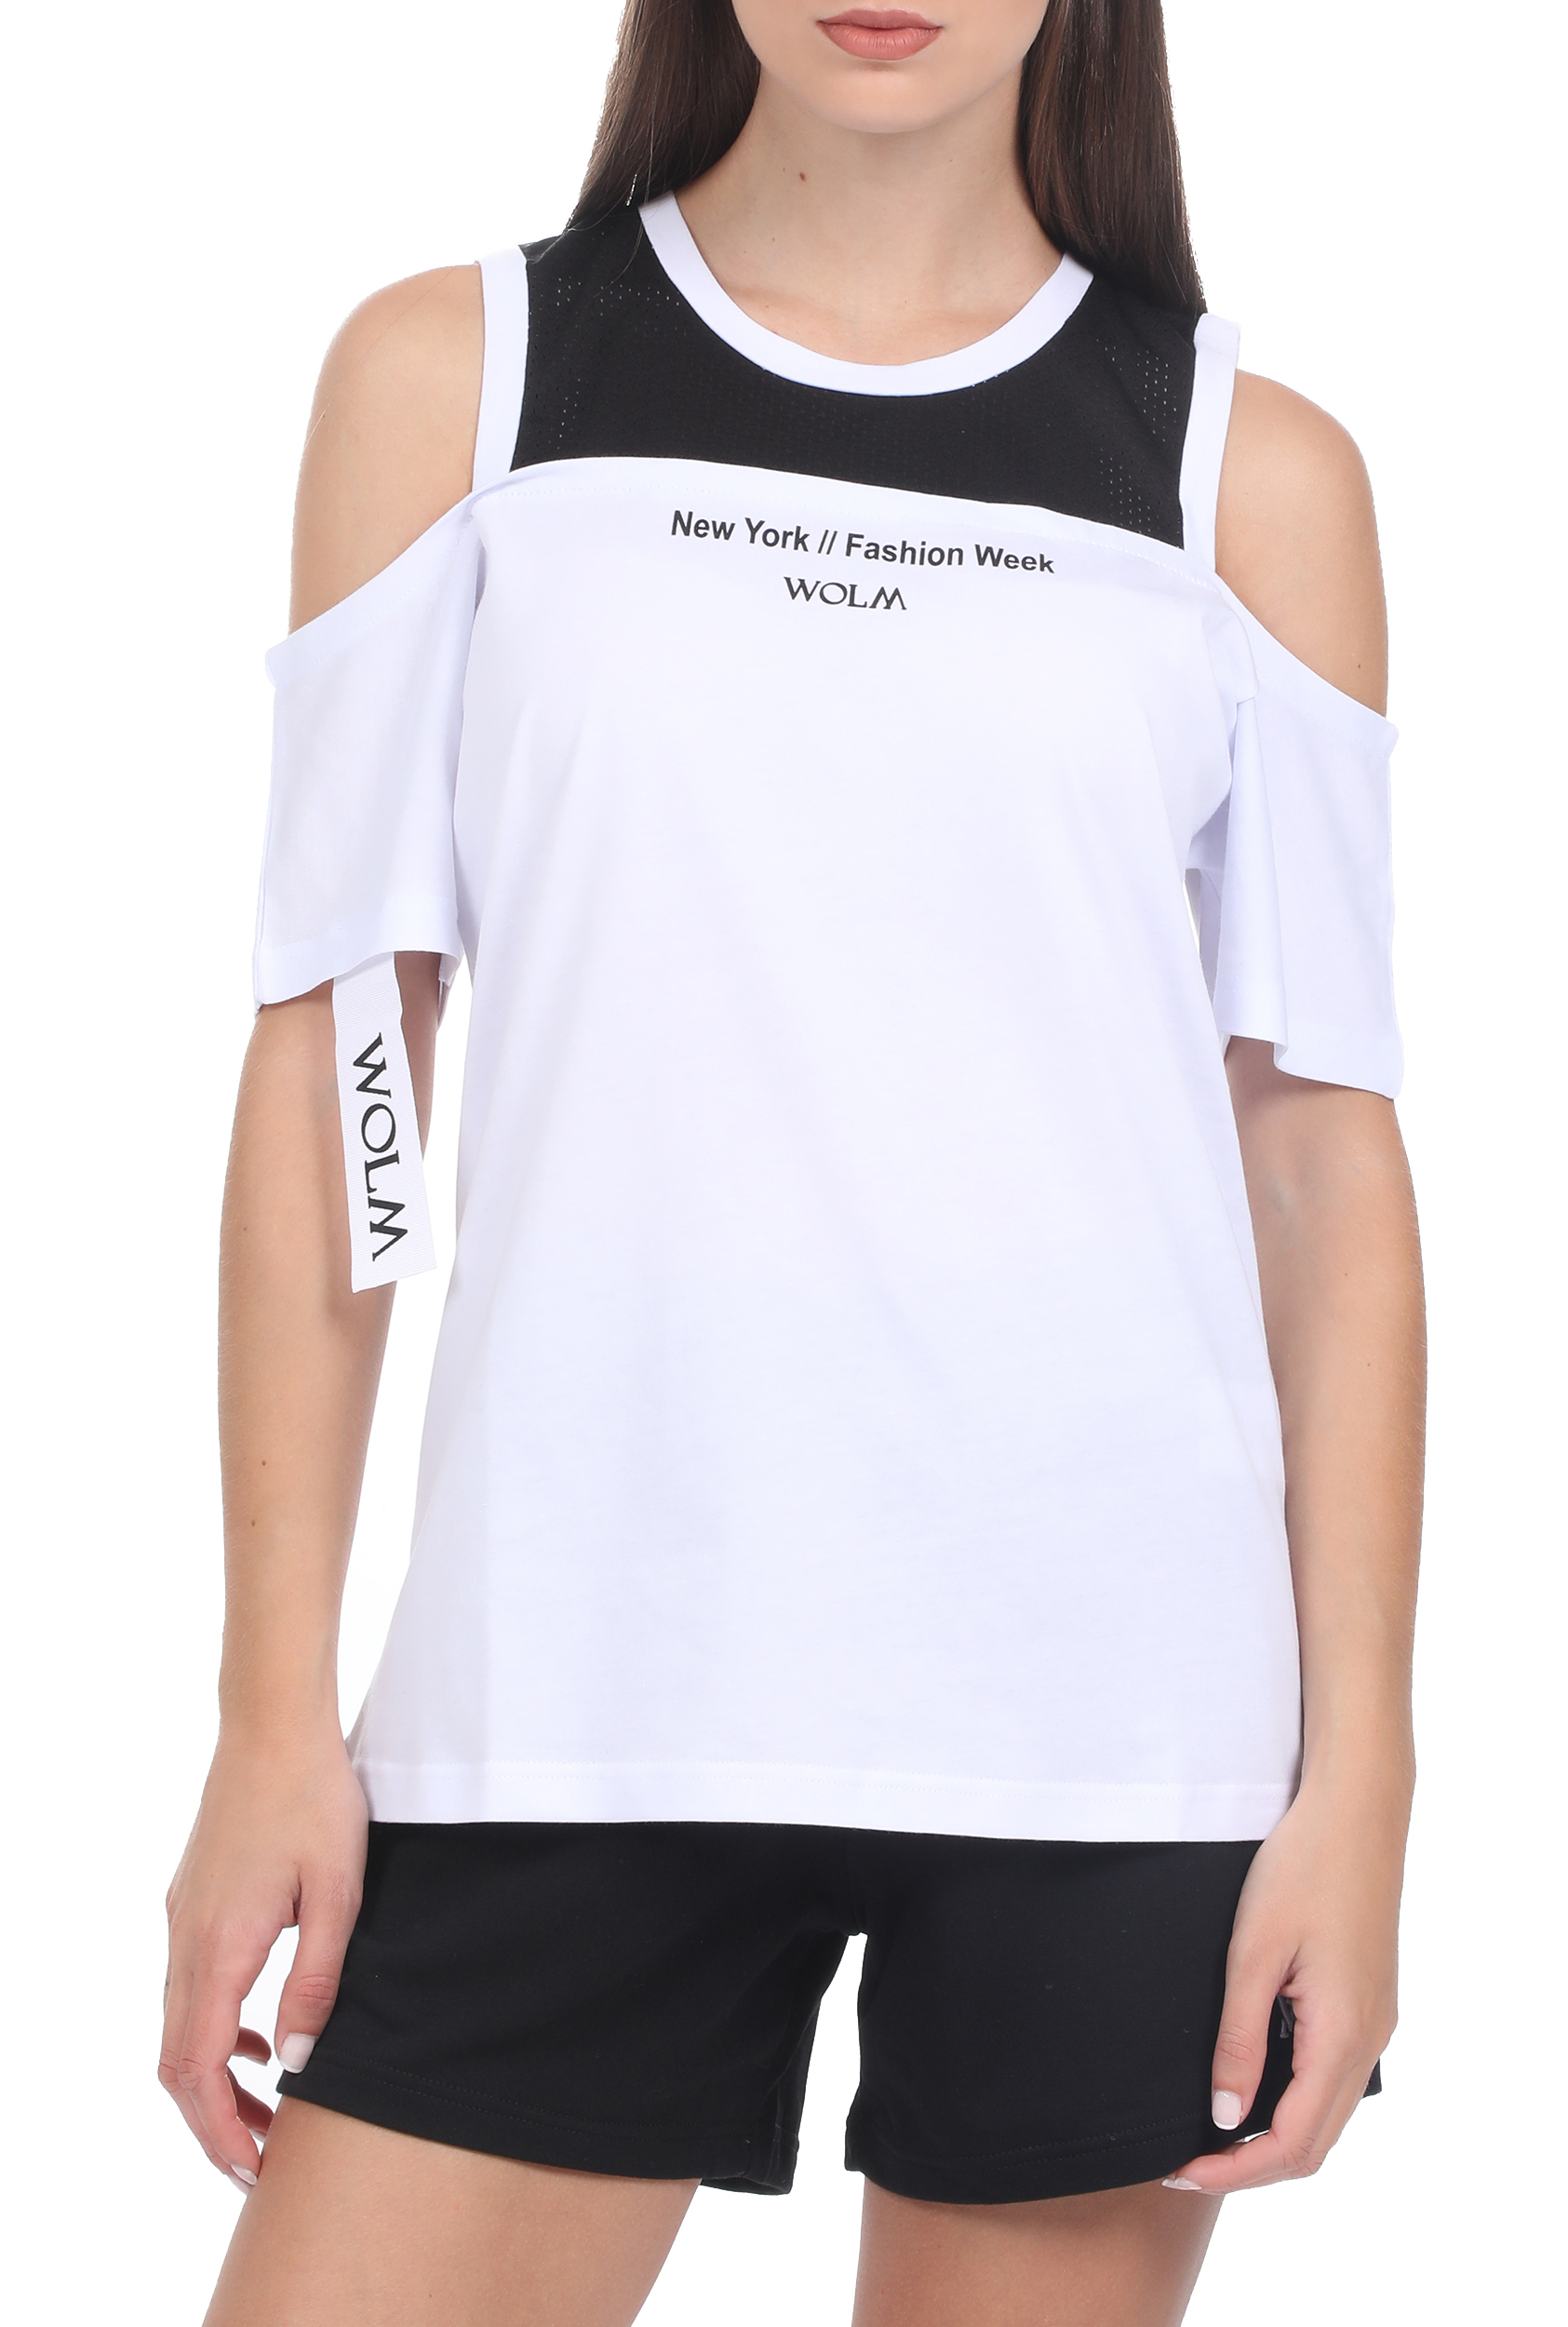 WOLM – Γυναικειο t-shirt WOLM μαυρο λευκο